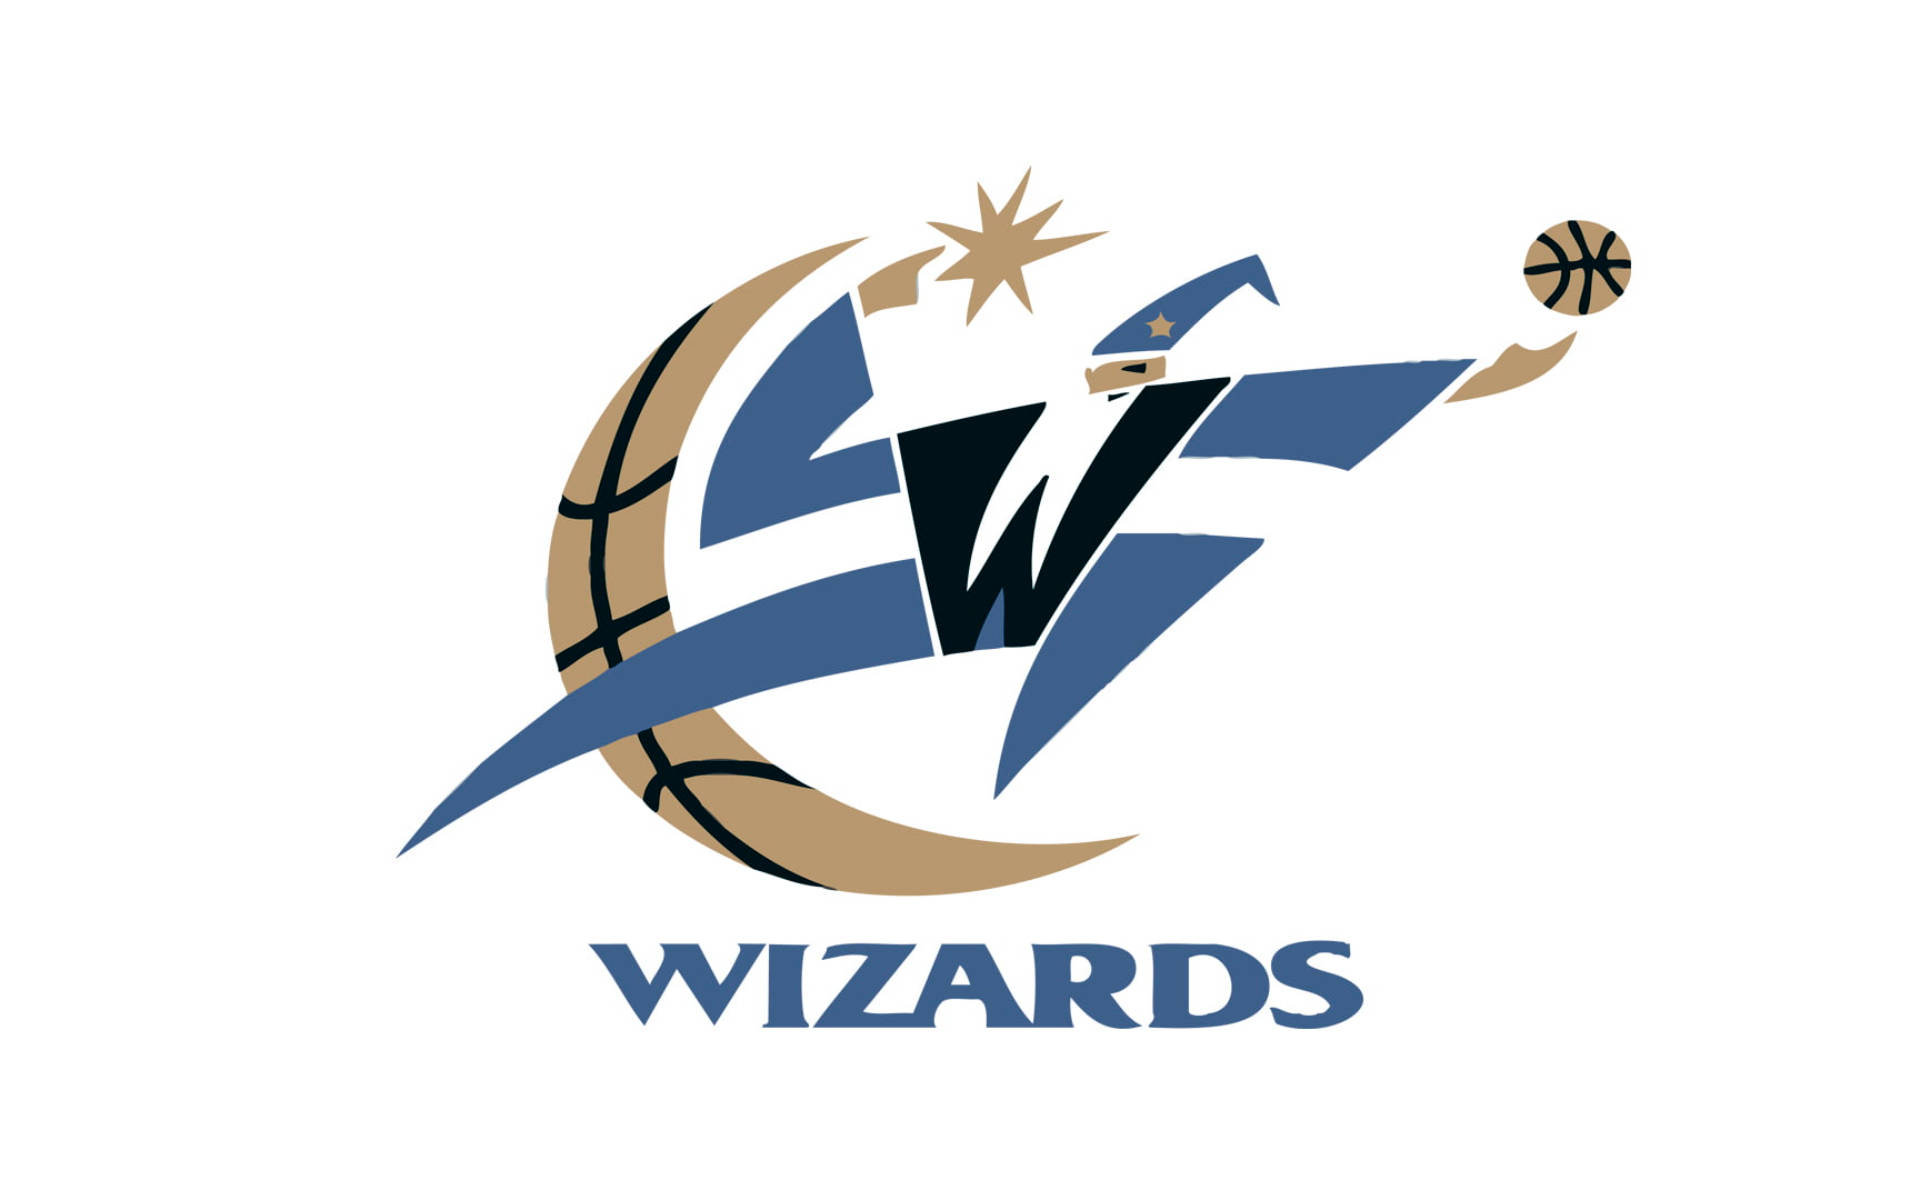 Washington Wizards Logo In White Wallpaper